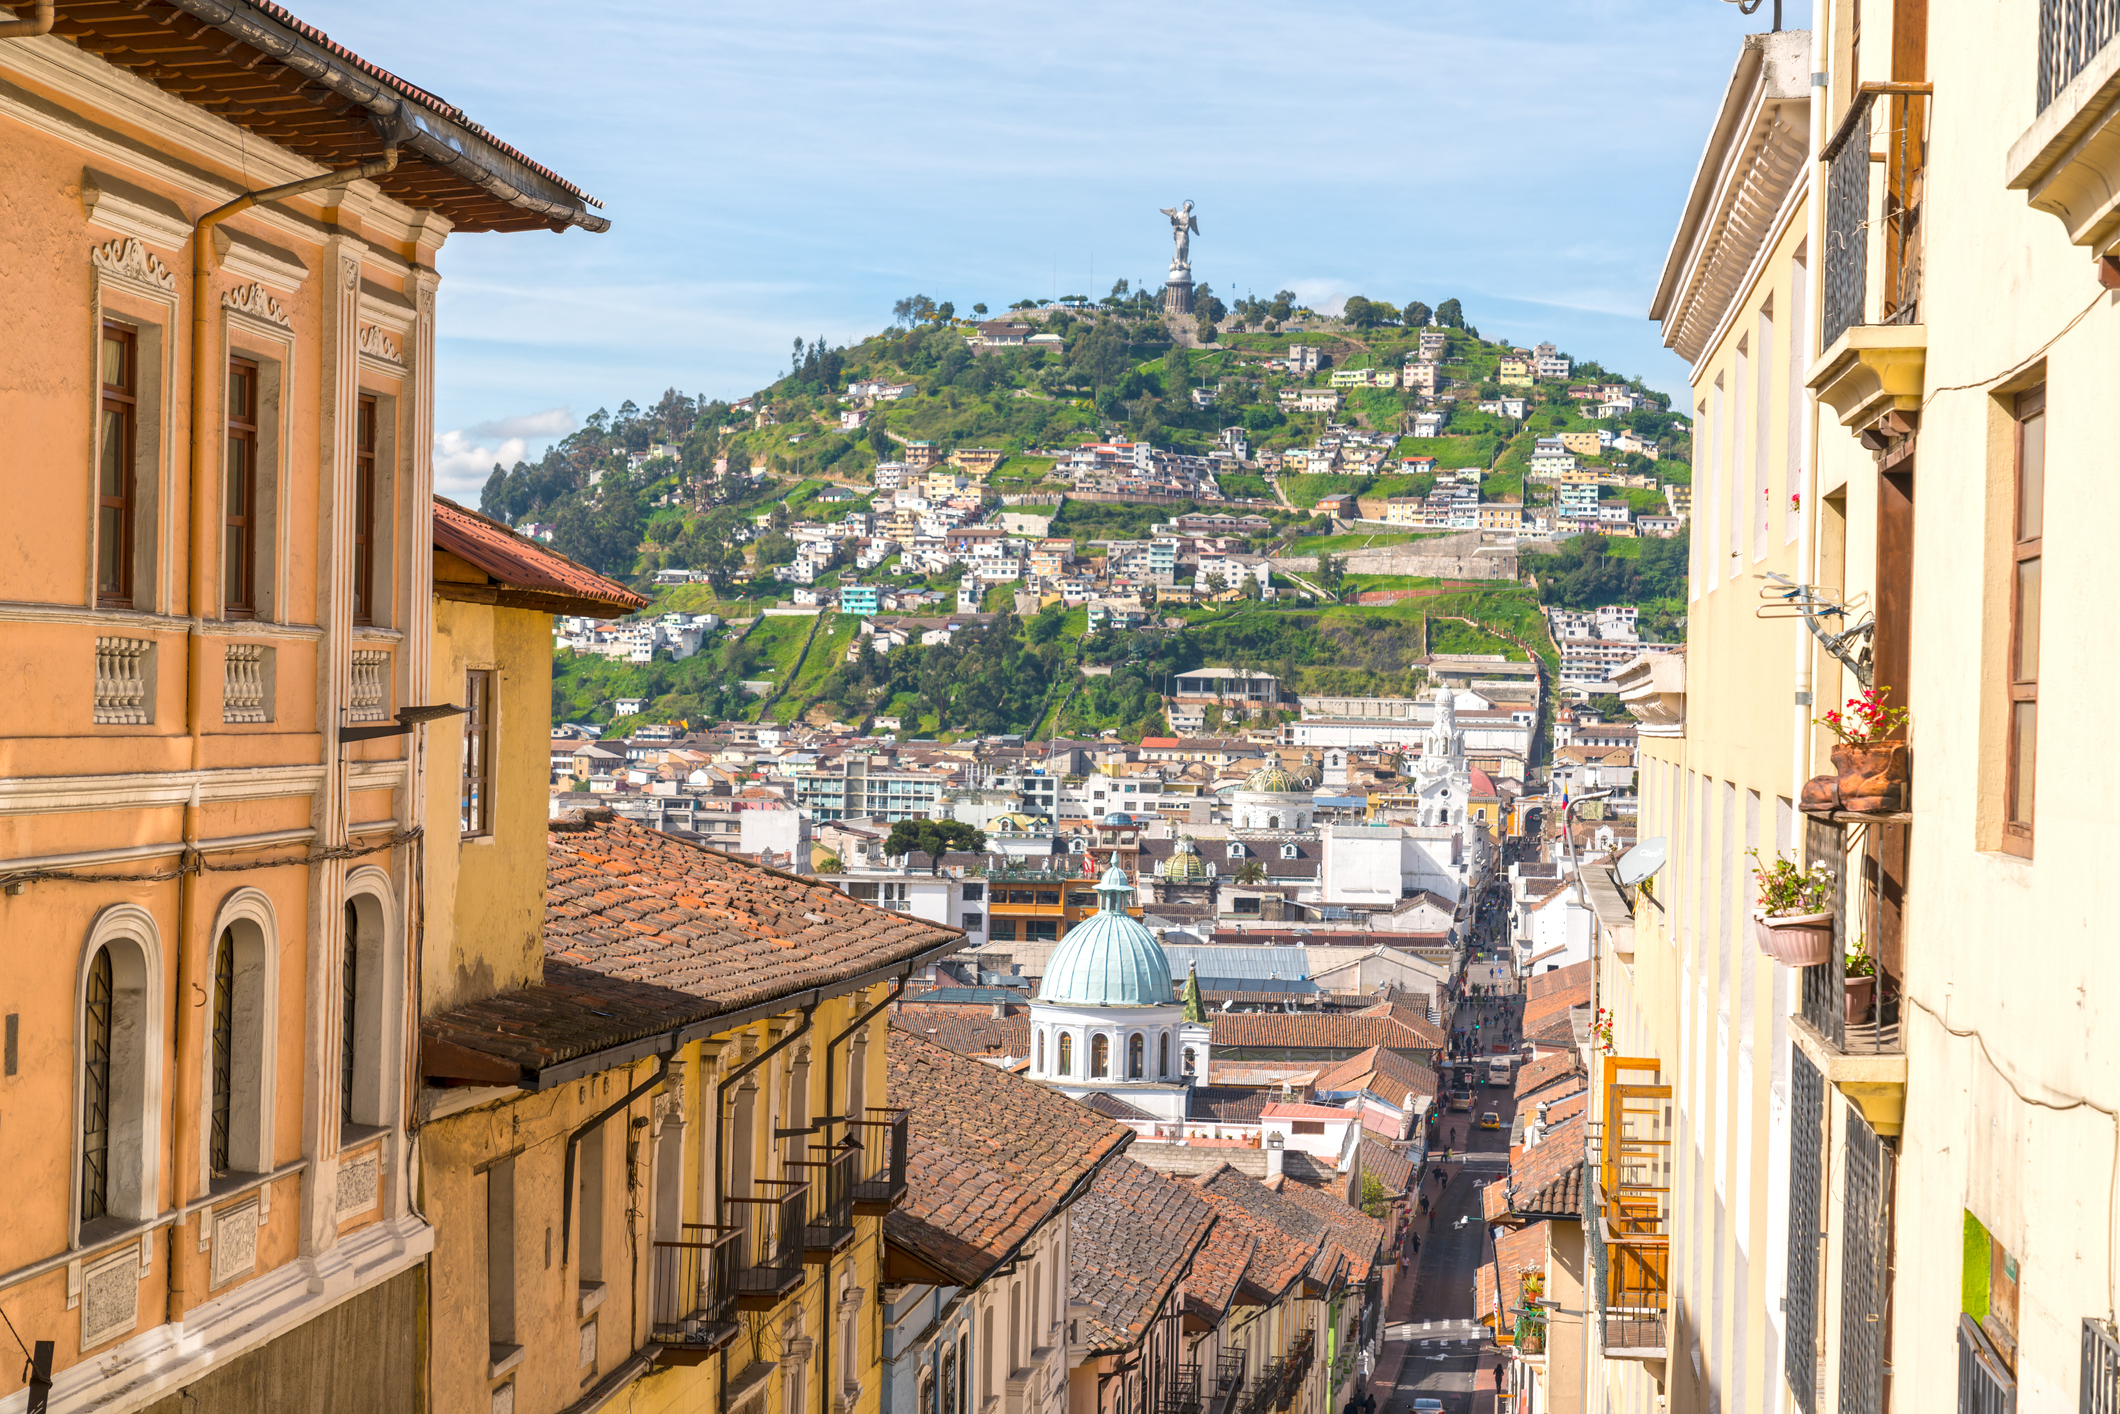 How Do I Find a Long-Term Rental in Ecuador?